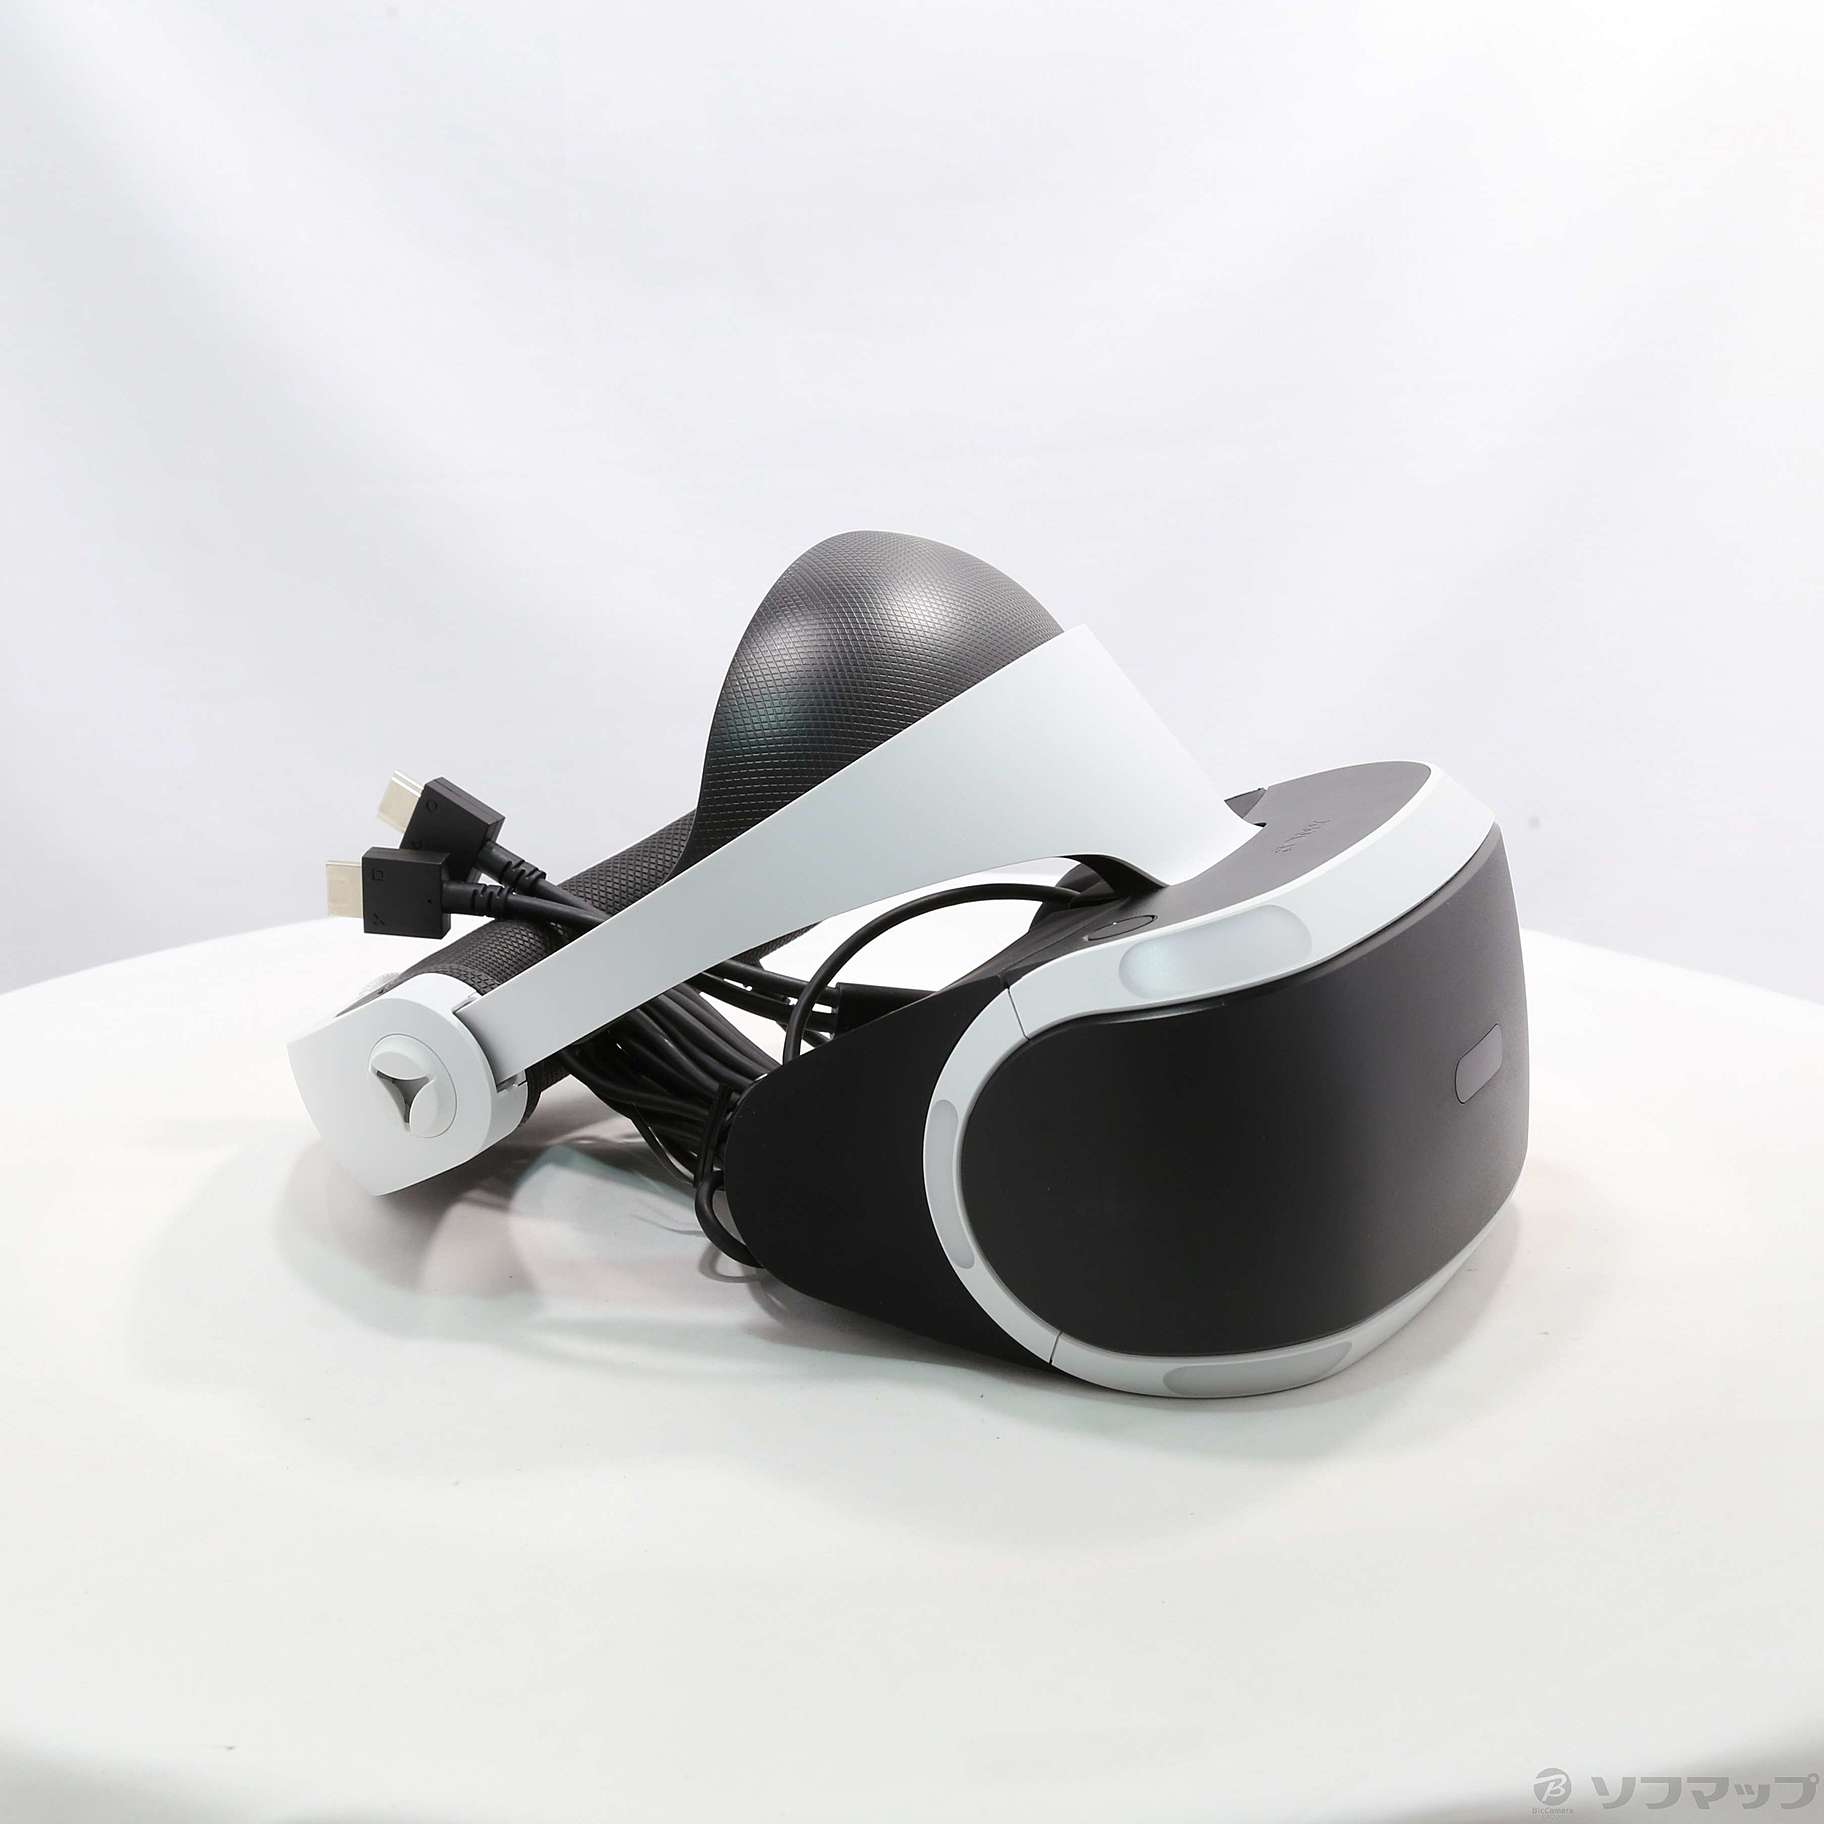 PlayStation VR 「PlayStation VR WORLDS」 特典封入版